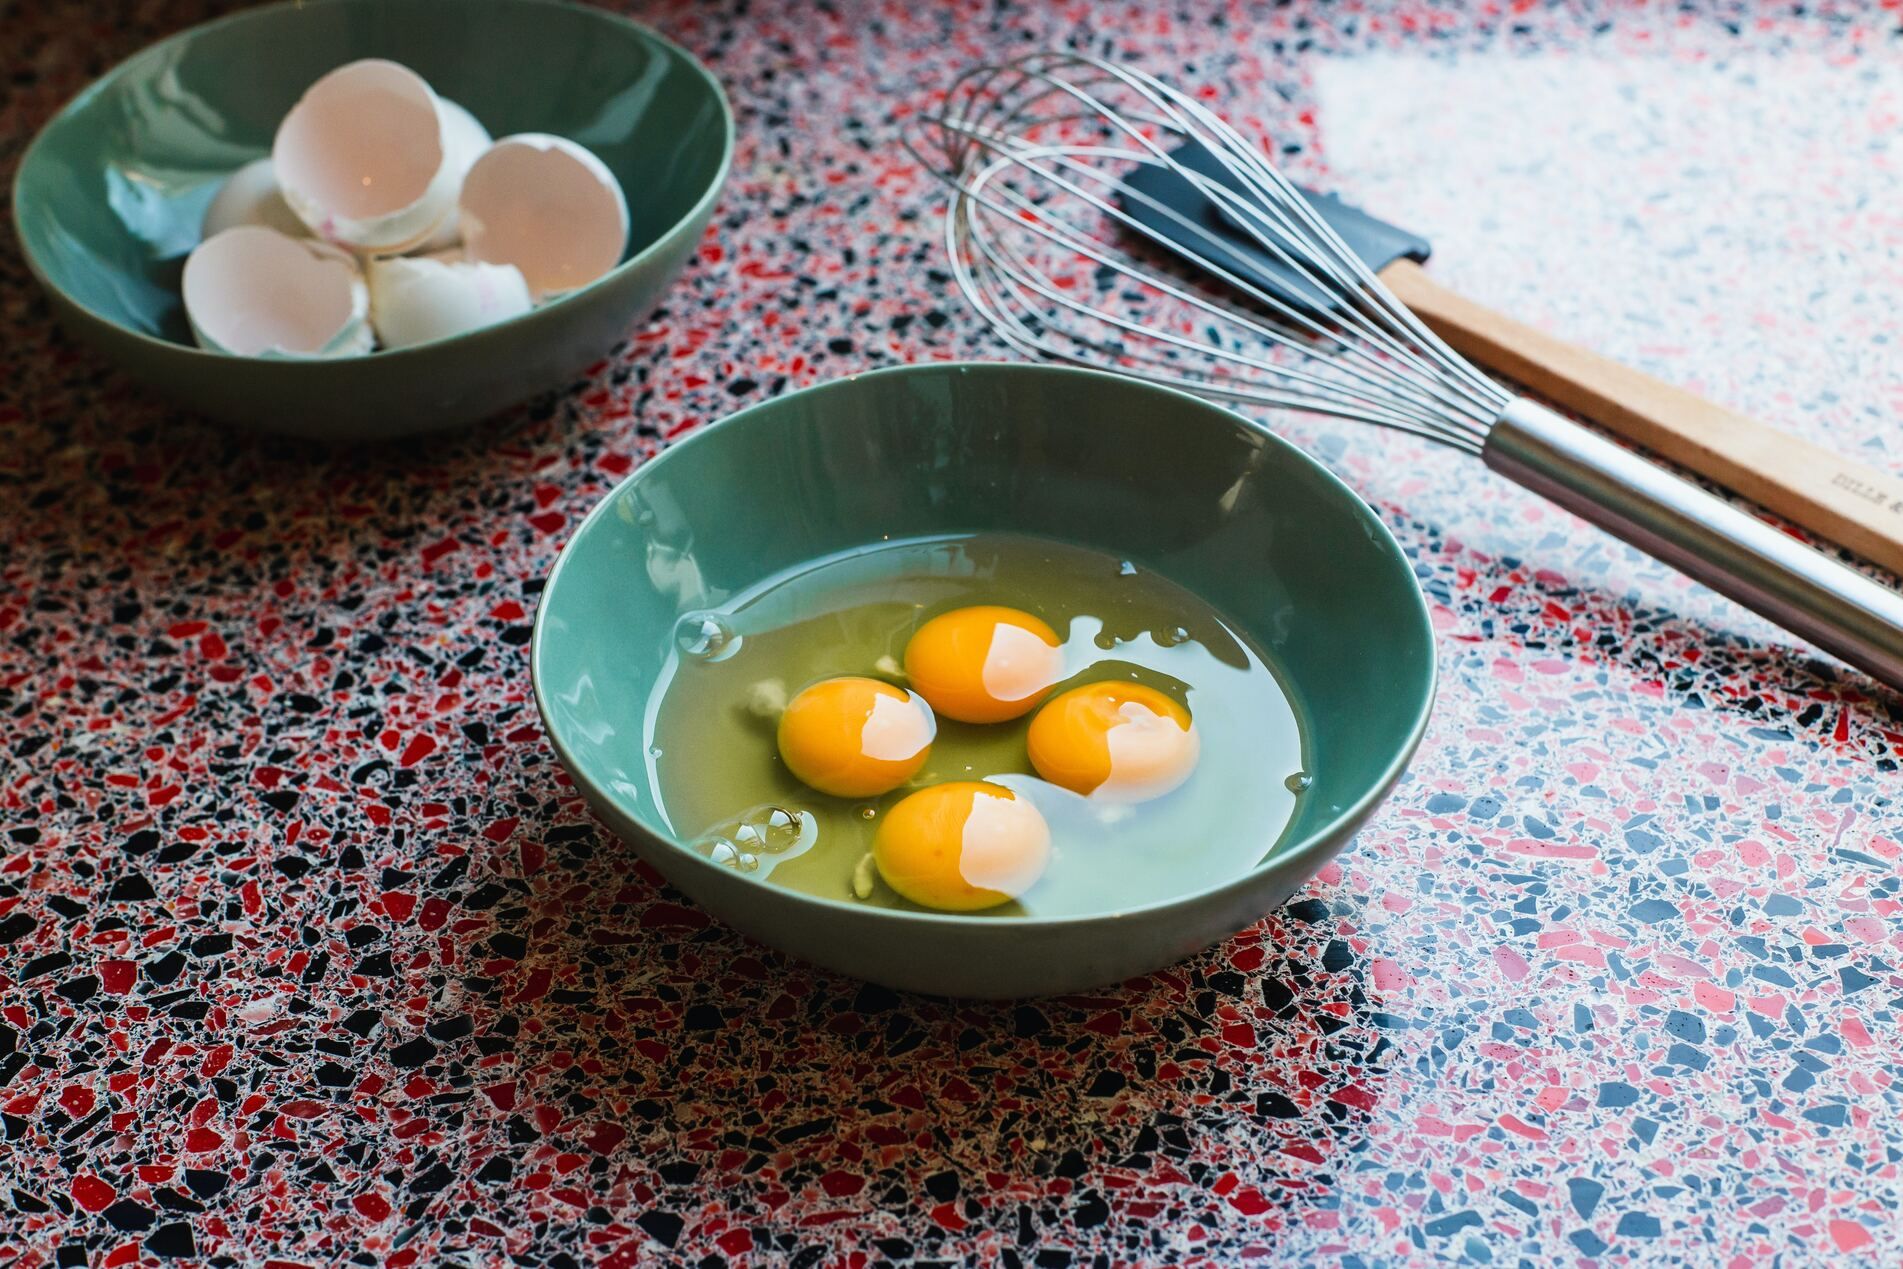 Beat eggs, pepper and salt in bowl until blended.